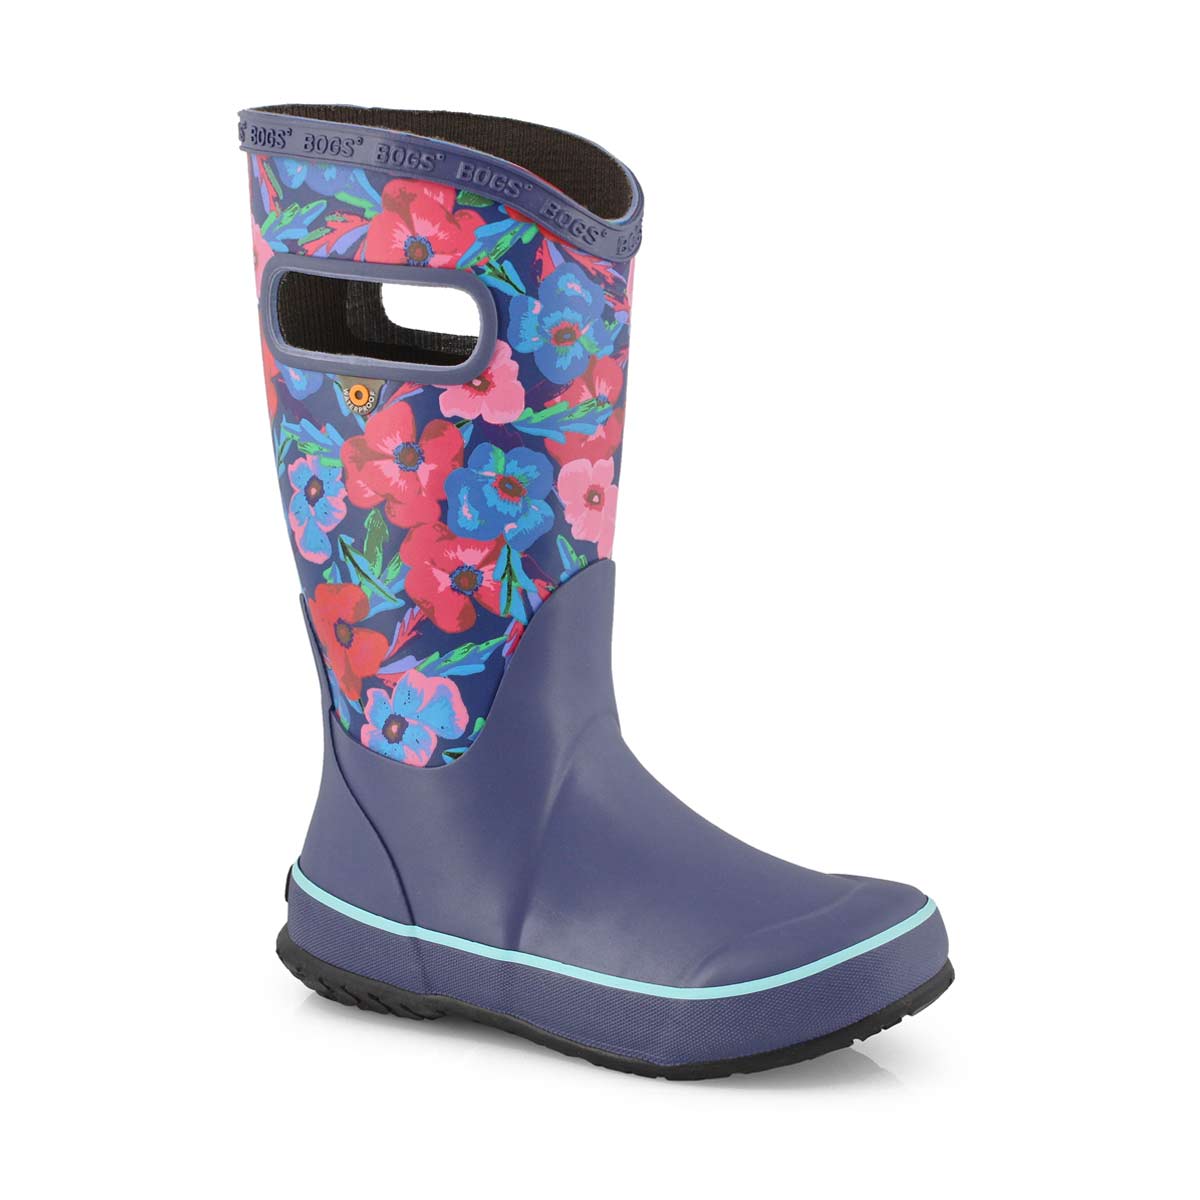 raining boots for girls